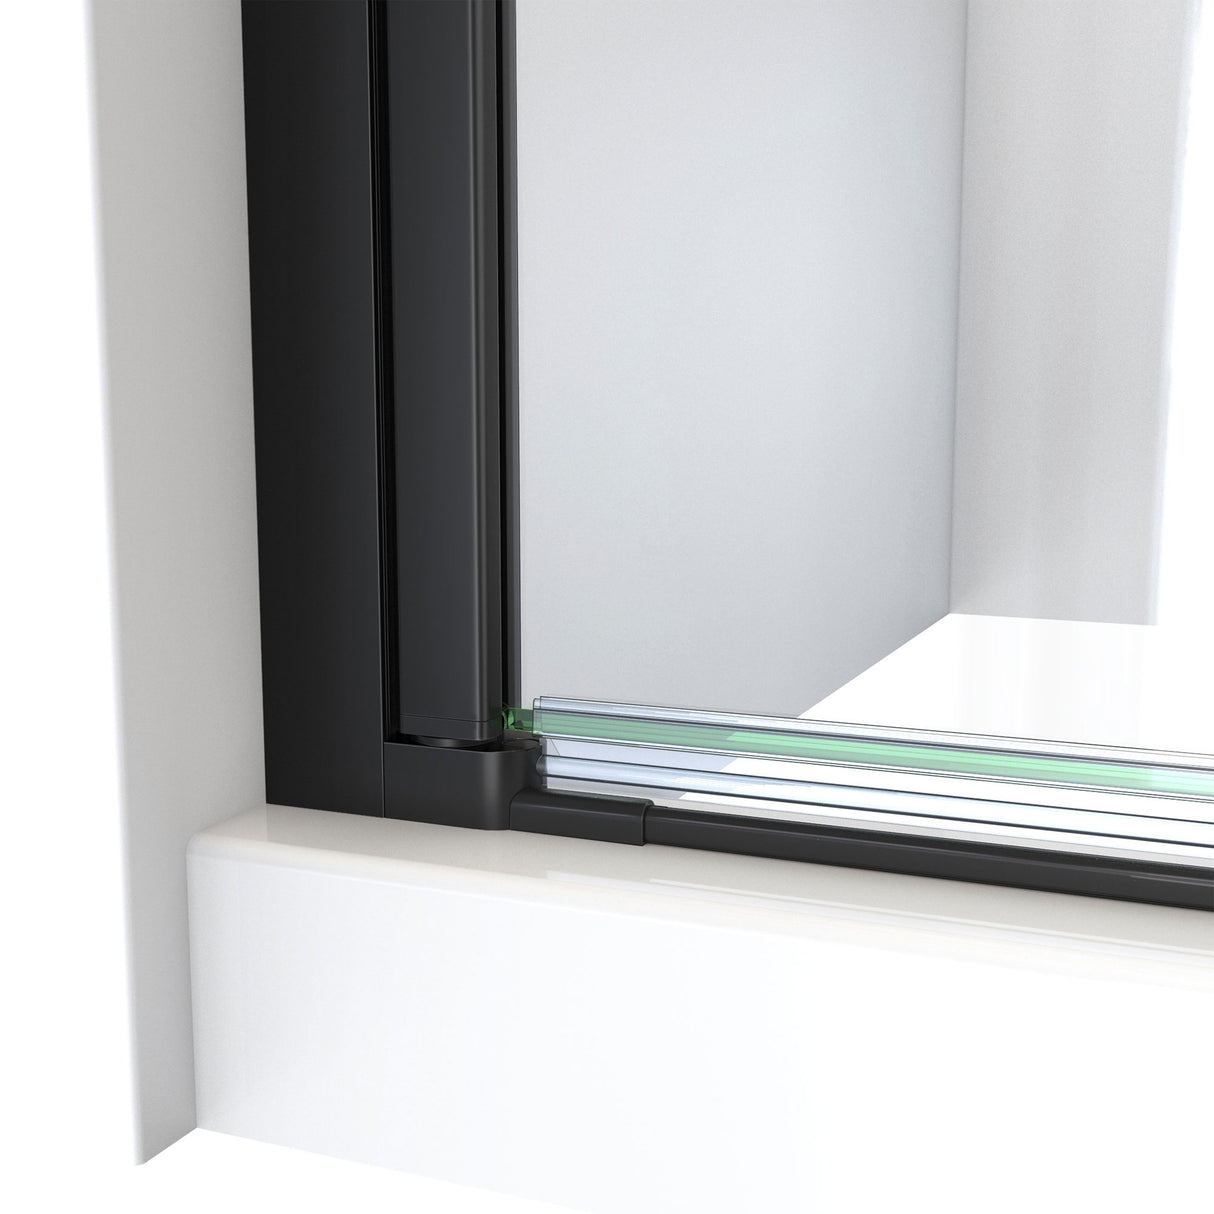 DreamLine Aqua-Q Fold 36 in. D x 36 in. W x 76 3/4 in. H Frameless Bi-Fold Shower Door in Satin Black with Biscuit Acrylic Kit